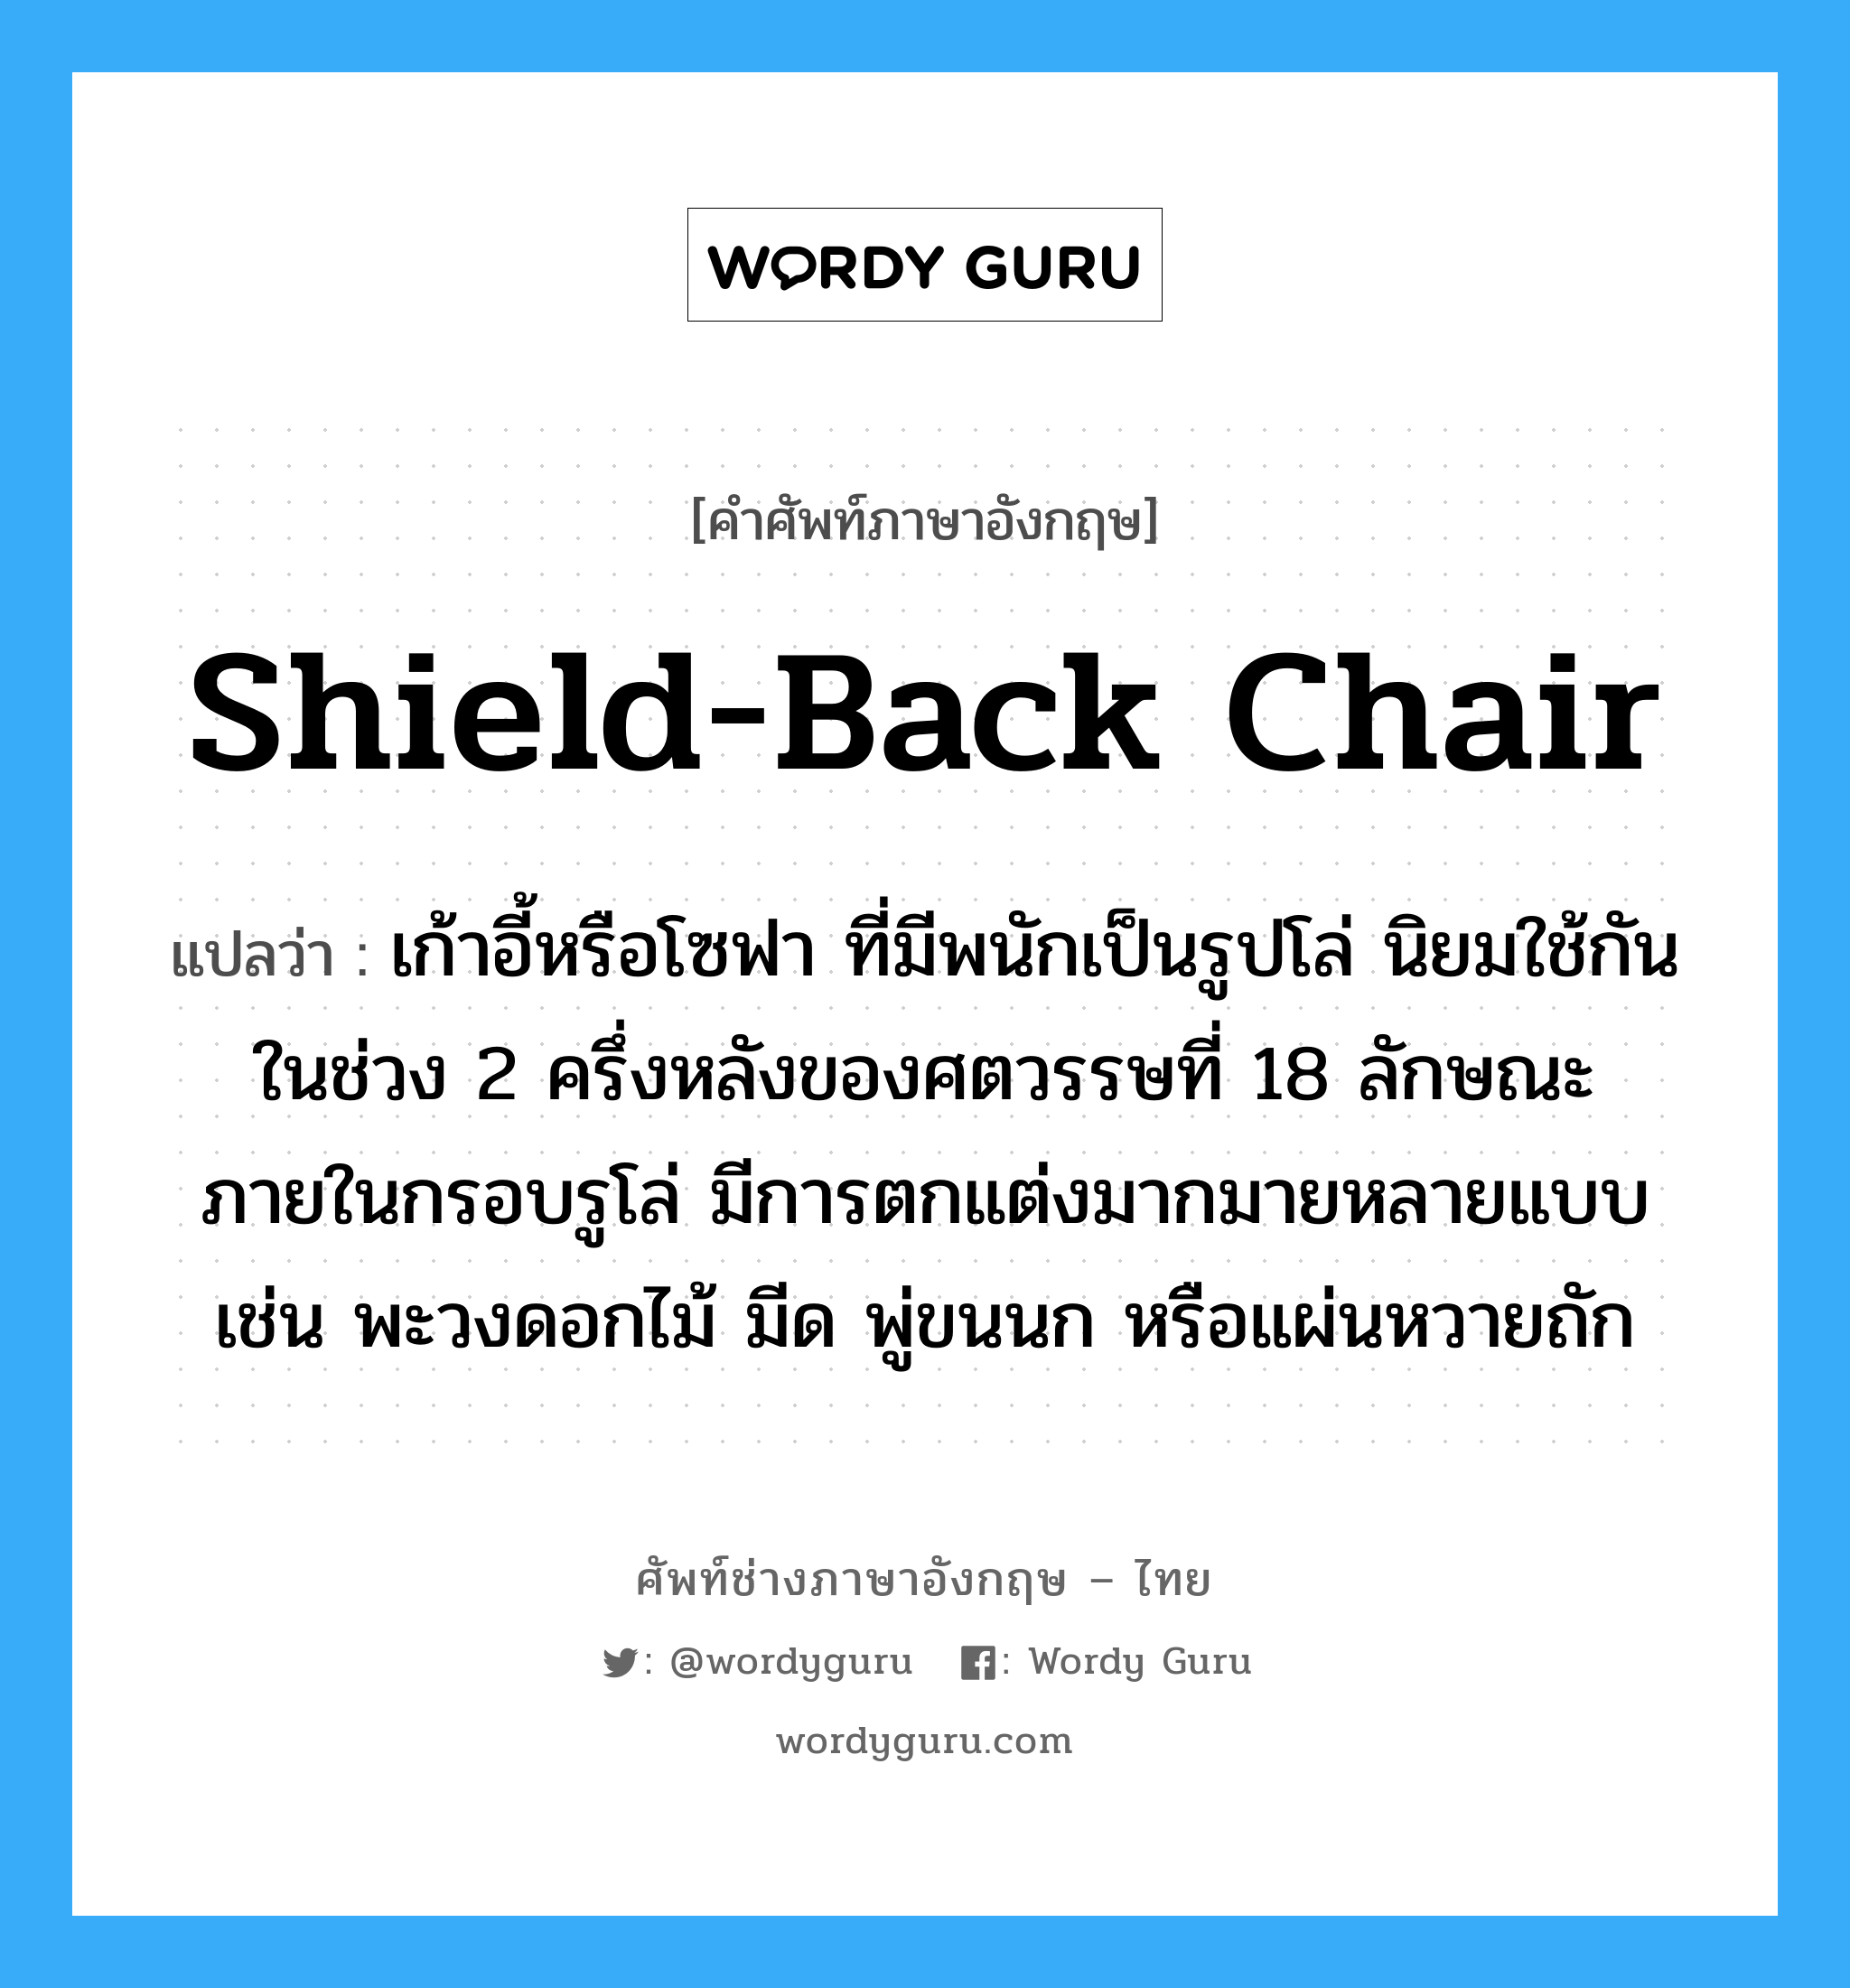 shield-back chair แปลว่า?, คำศัพท์ช่างภาษาอังกฤษ - ไทย shield-back chair คำศัพท์ภาษาอังกฤษ shield-back chair แปลว่า เก้าอี้หรือโซฟา ที่มีพนักเป็นรูปโล่ นิยมใช้กันในช่วง 2 ครึ่งหลังของศตวรรษที่ 18 ลักษณะภายในกรอบรูโล่ มีการตกแต่งมากมายหลายแบบ เช่น พะวงดอกไม้ มีด พู่ขนนก หรือแผ่นหวายถัก